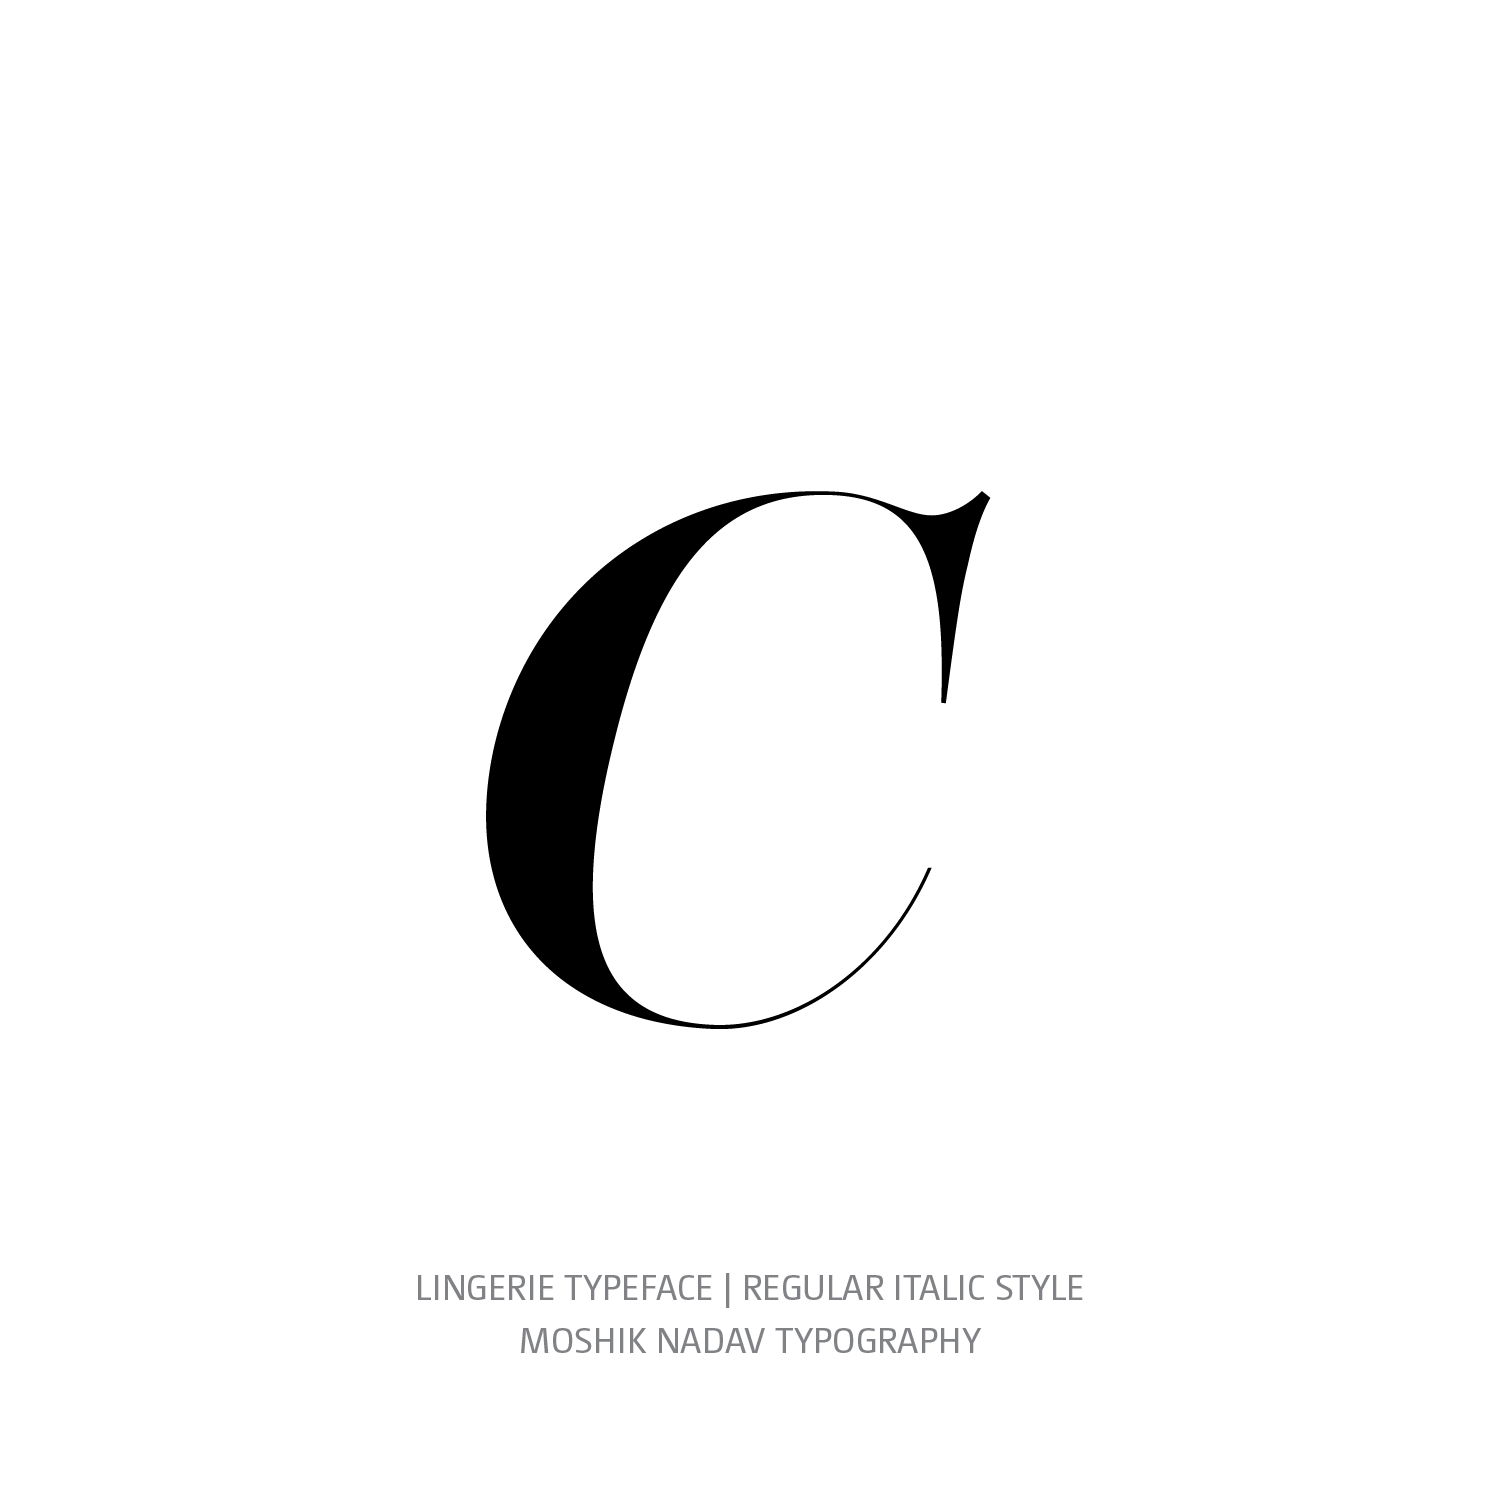 Lingerie Typeface Regular Italic c - Fashion fonts by Moshik Nadav Typography